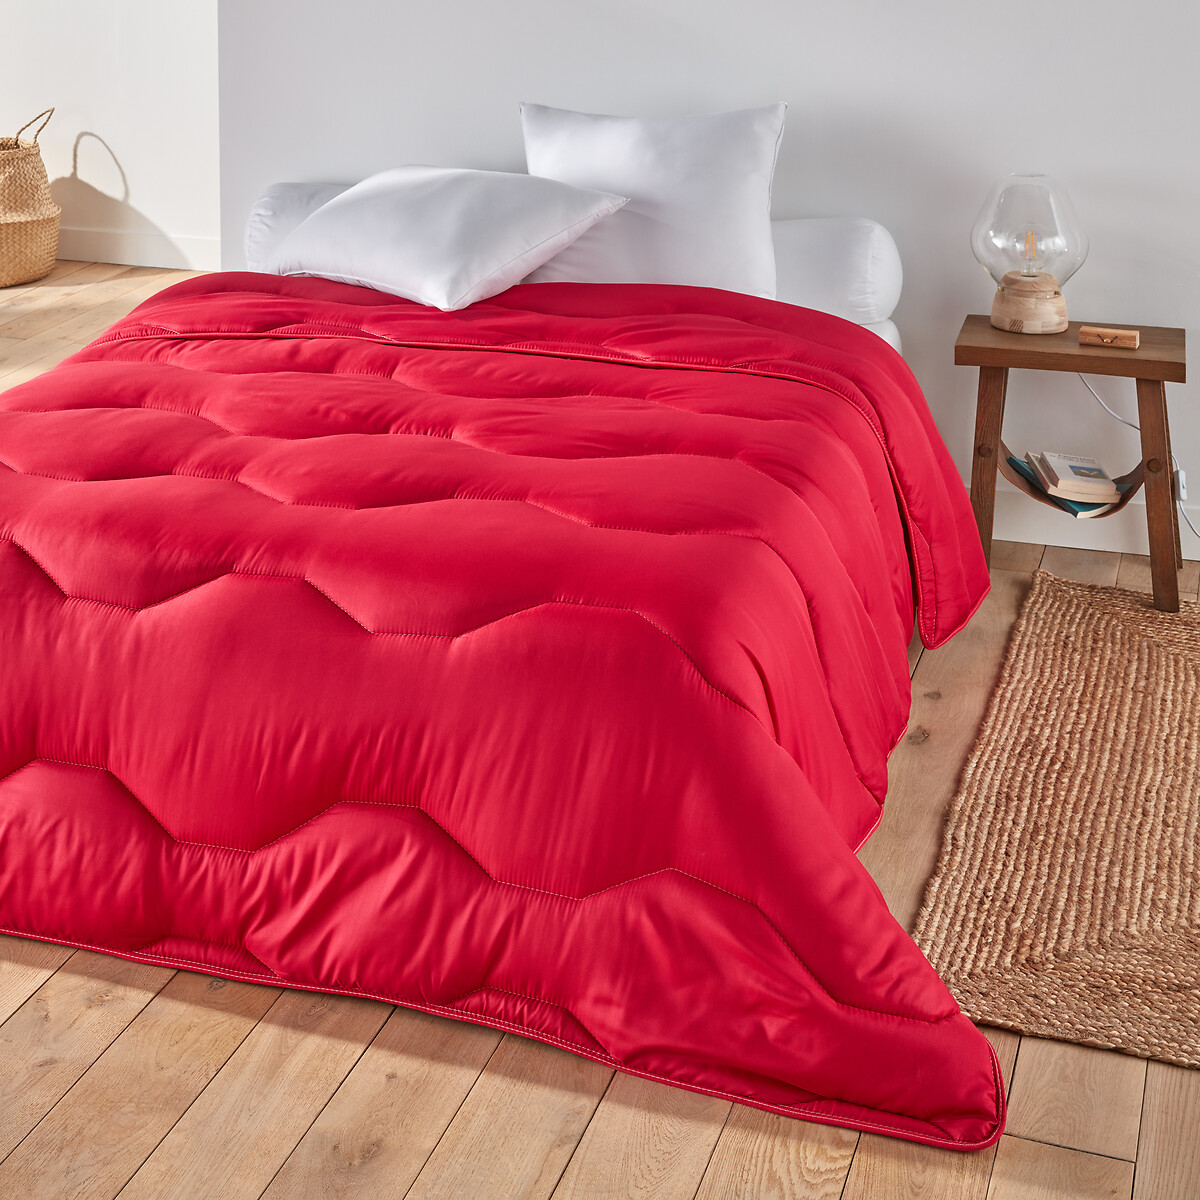 Одеяло La Redoute Из синтетики  гм 260 x 240 см красный, размер 260 x 240 см - фото 1